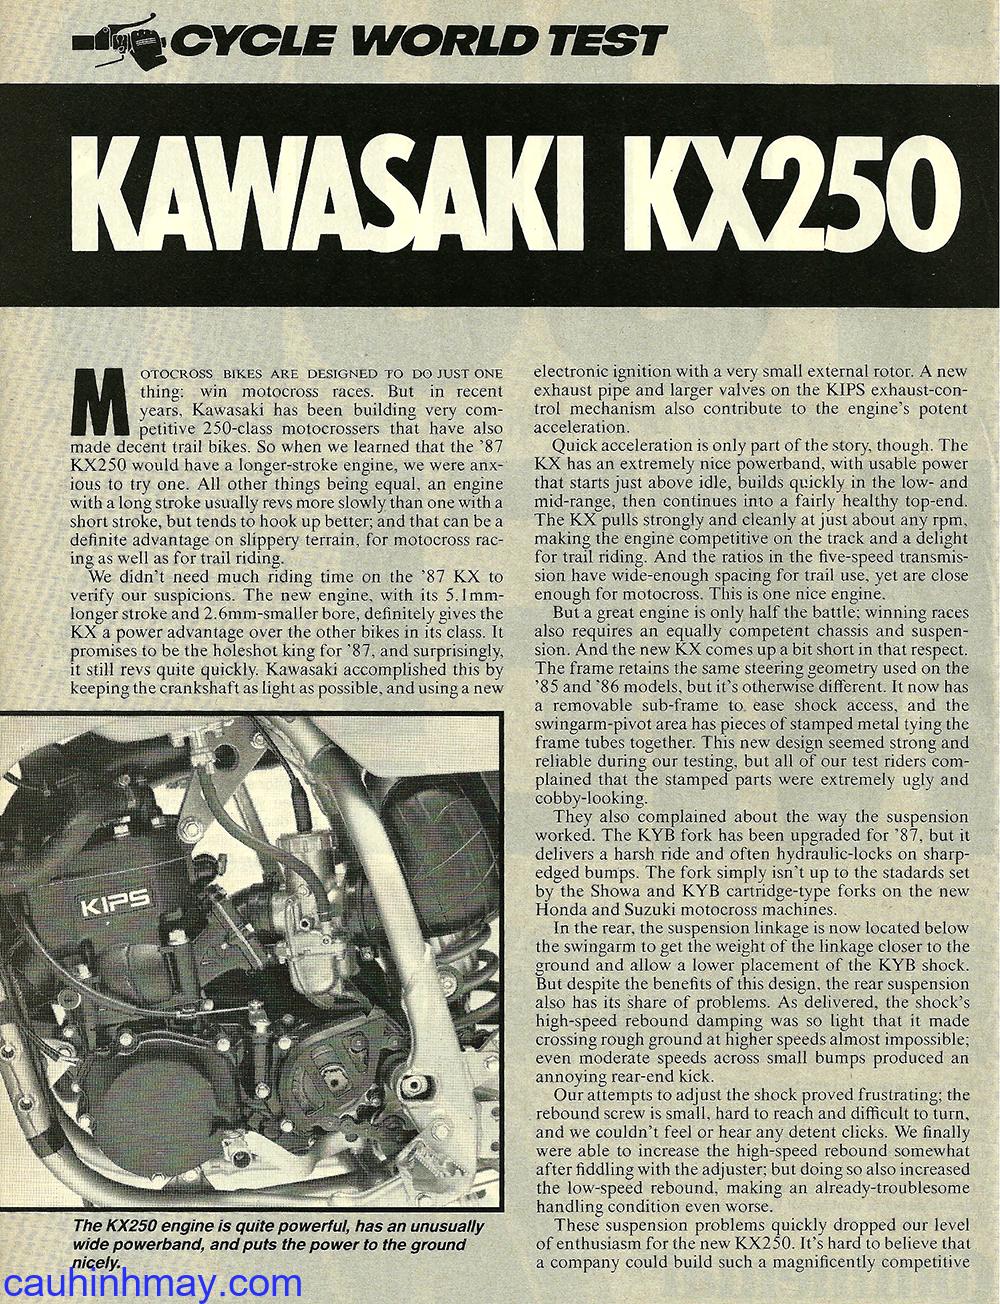 1987 KAWASAKI KX 250 - cauhinhmay.com